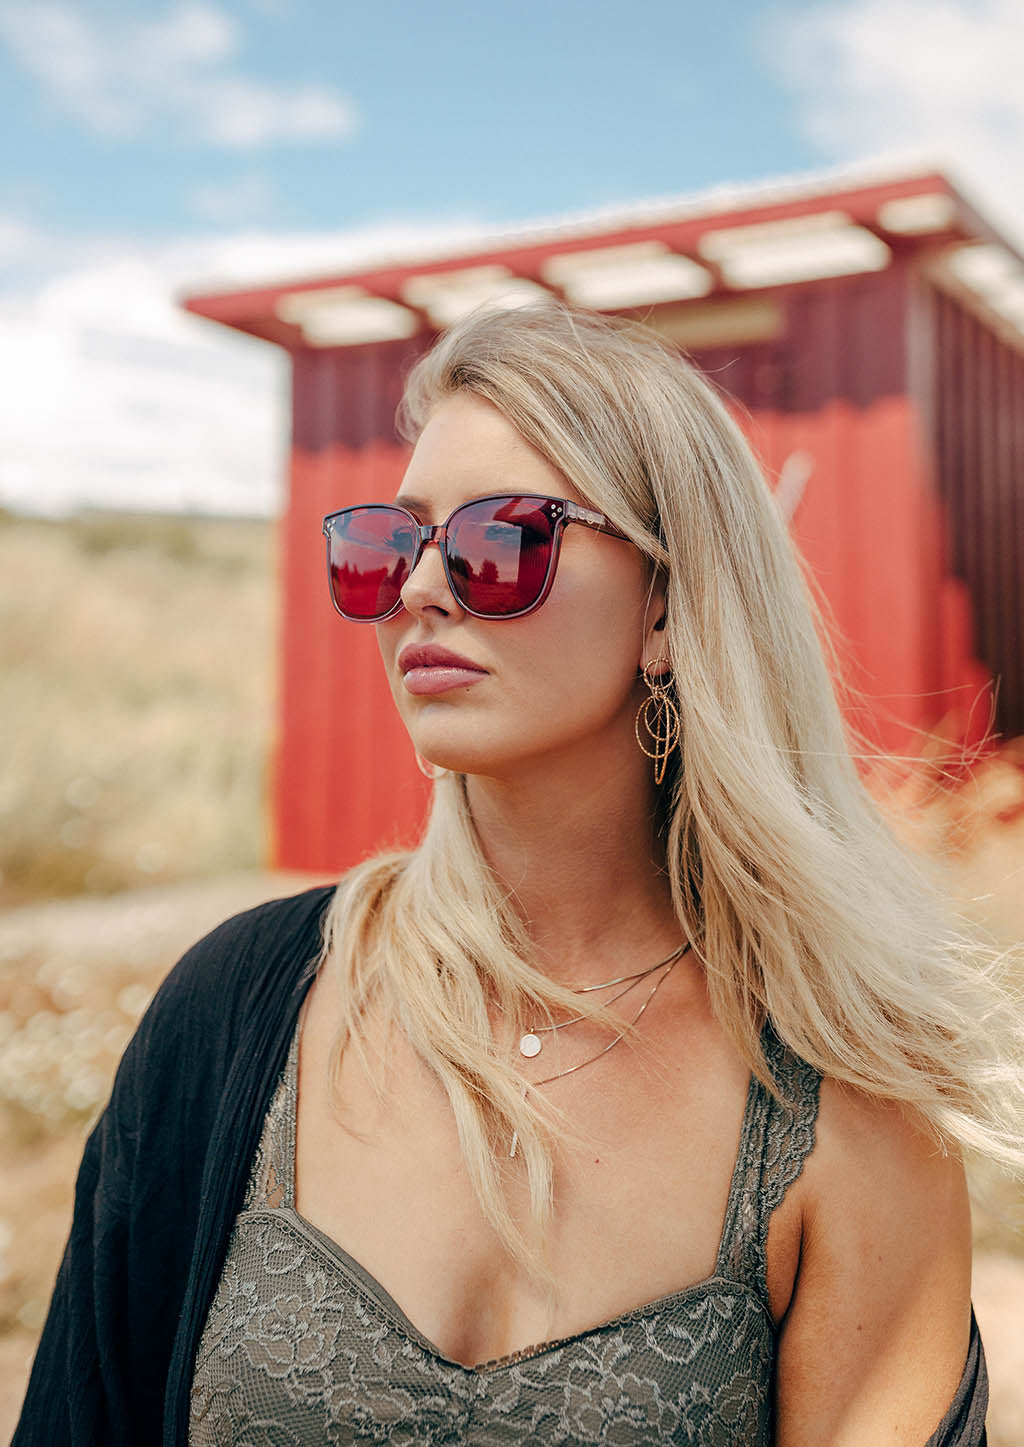 Magnolia Wayfarer sunglasses - On female blonde model